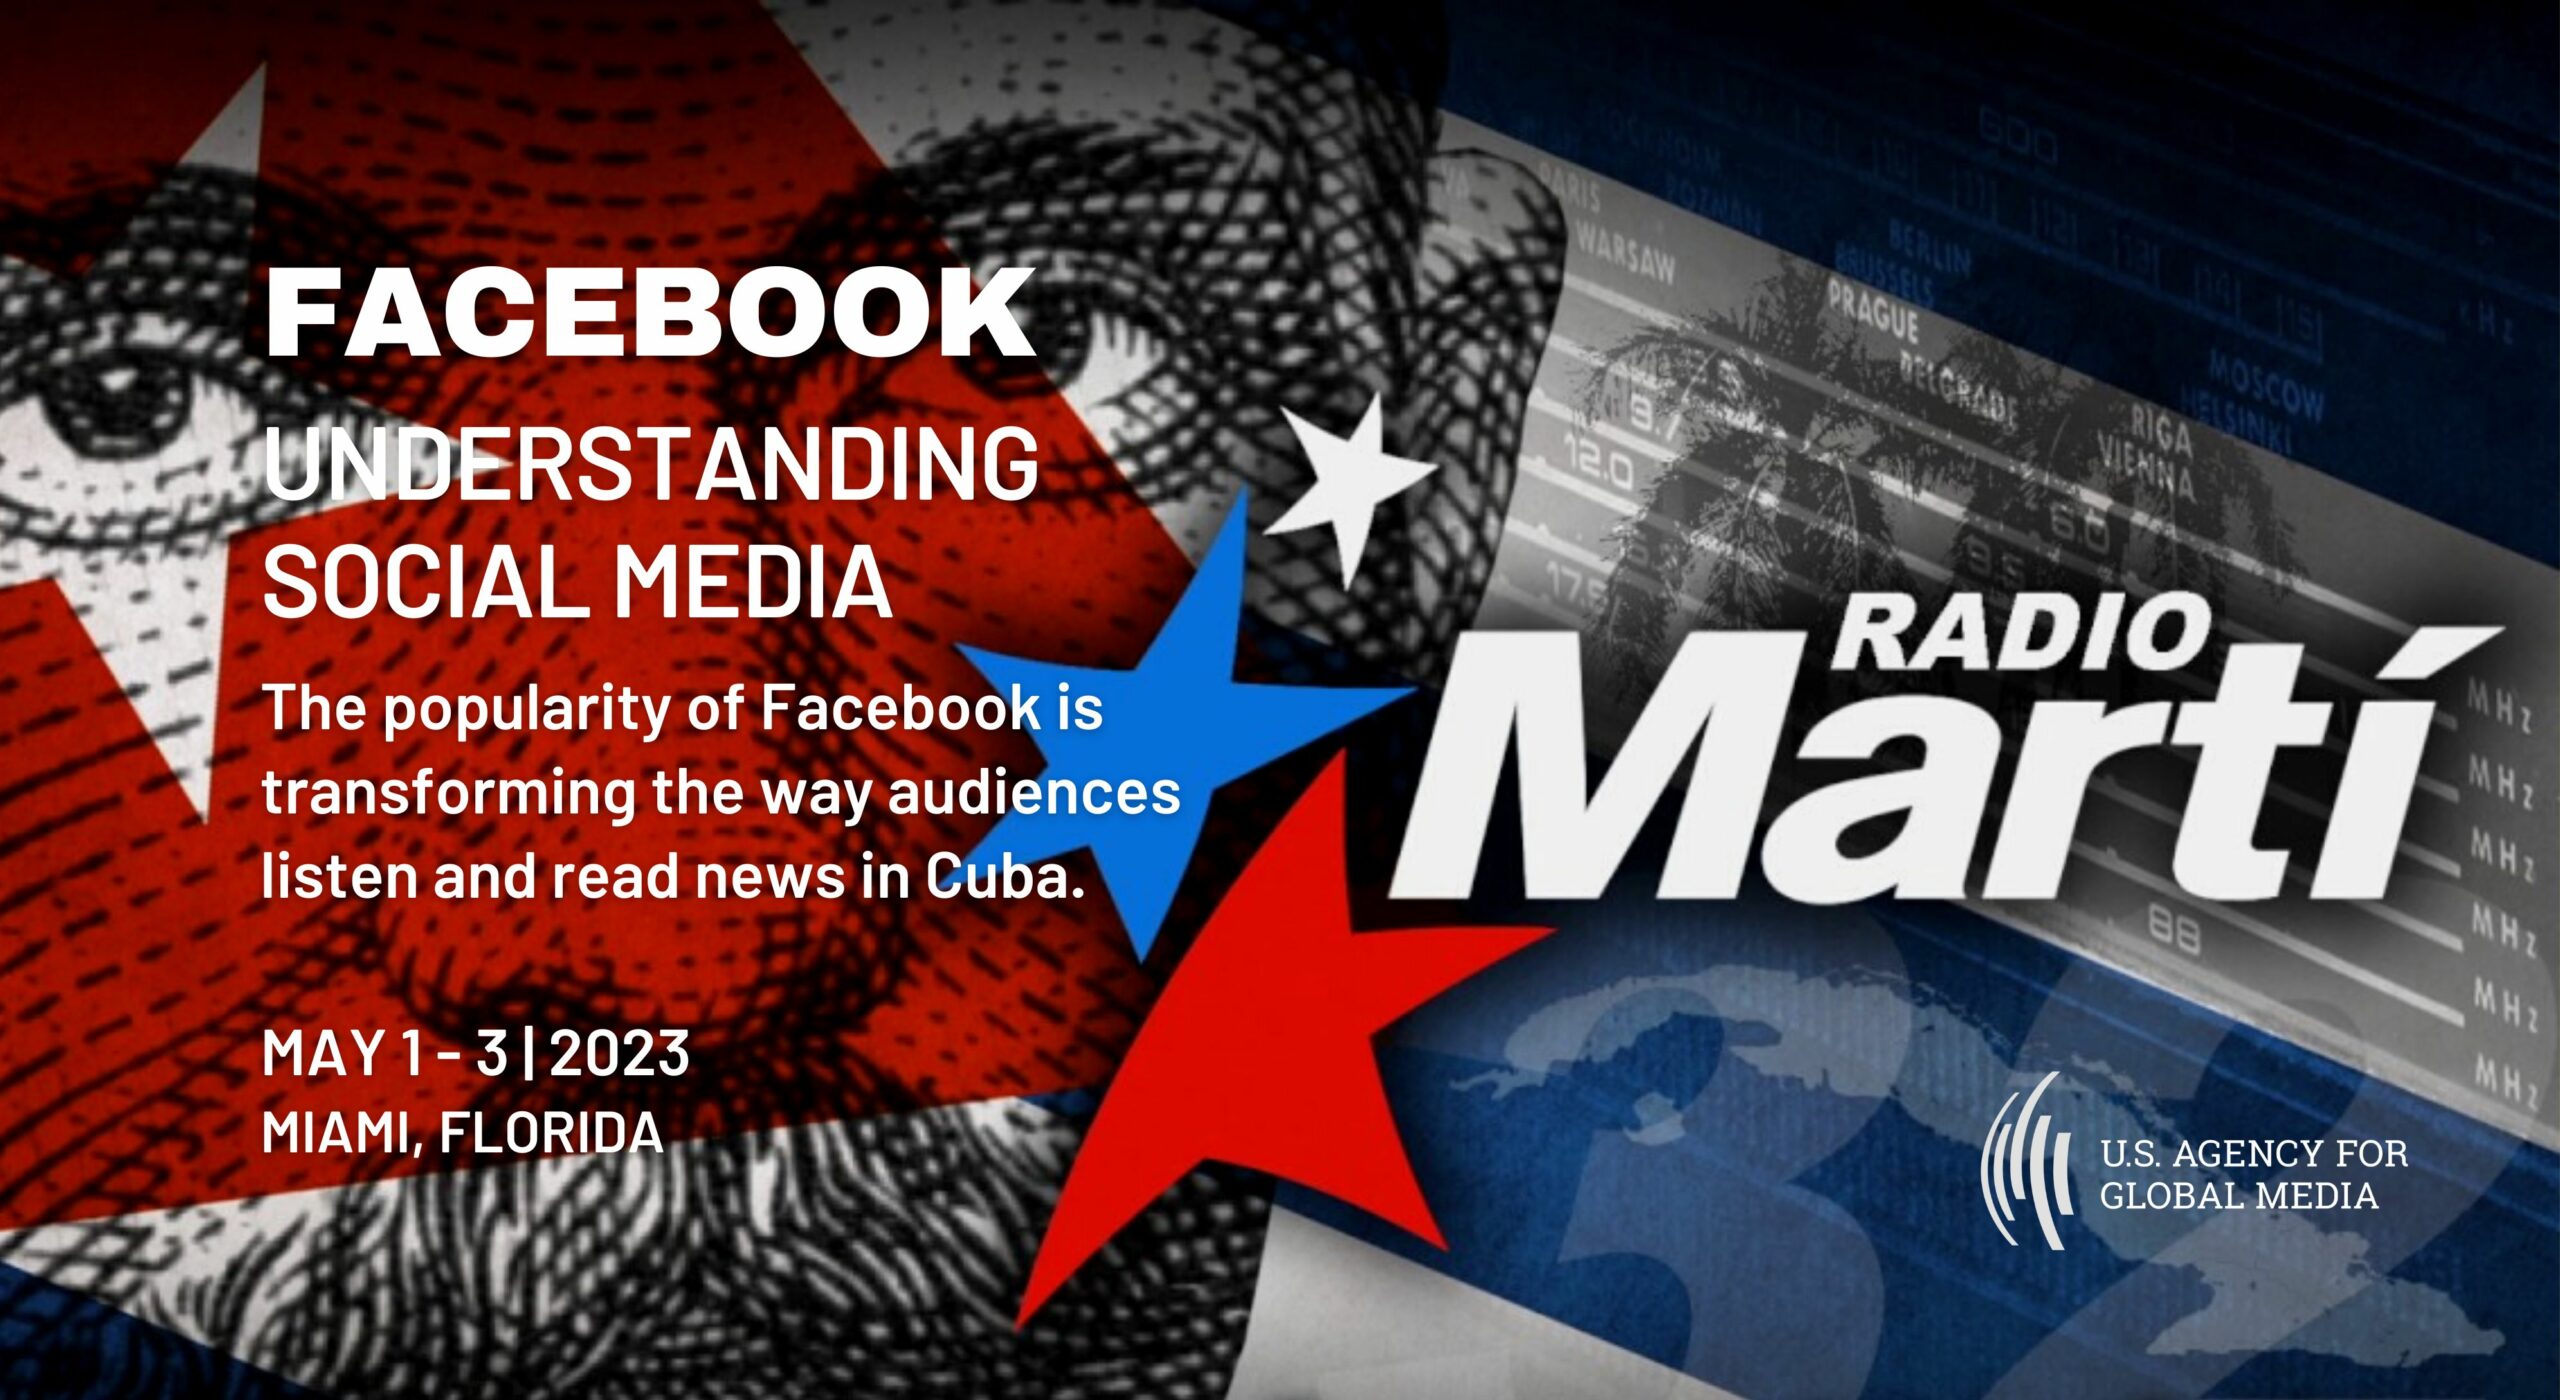 Miami: Facebook in Cuba